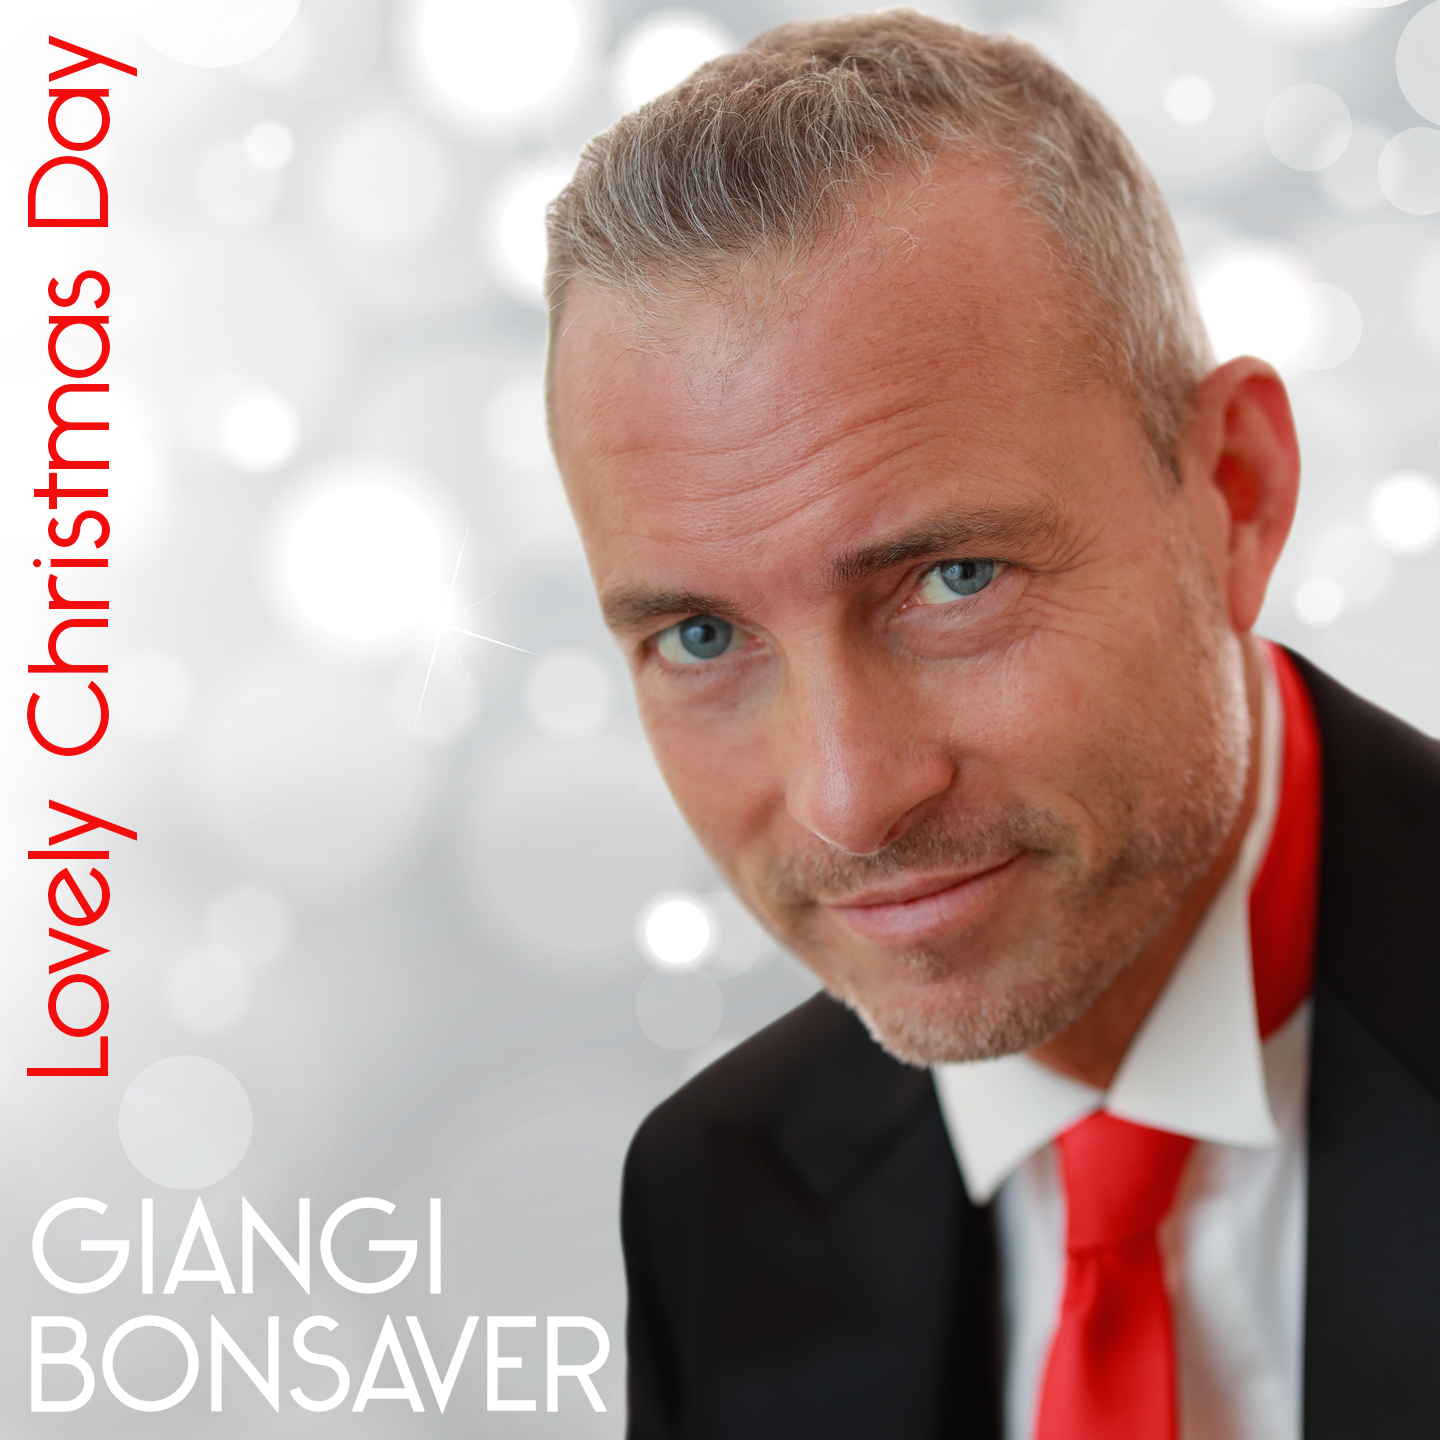 Lovely Christmas Day il nuovo singolo di Giangi Bonsaver per il Natale 2020 